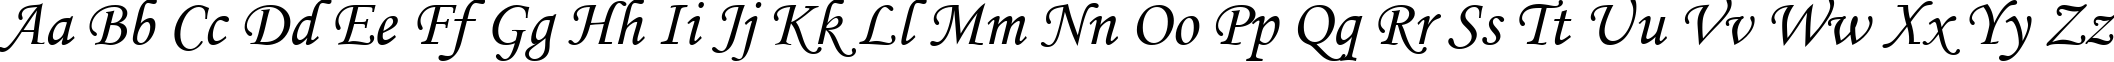 Пример написания английского алфавита шрифтом Monotype Corsiva